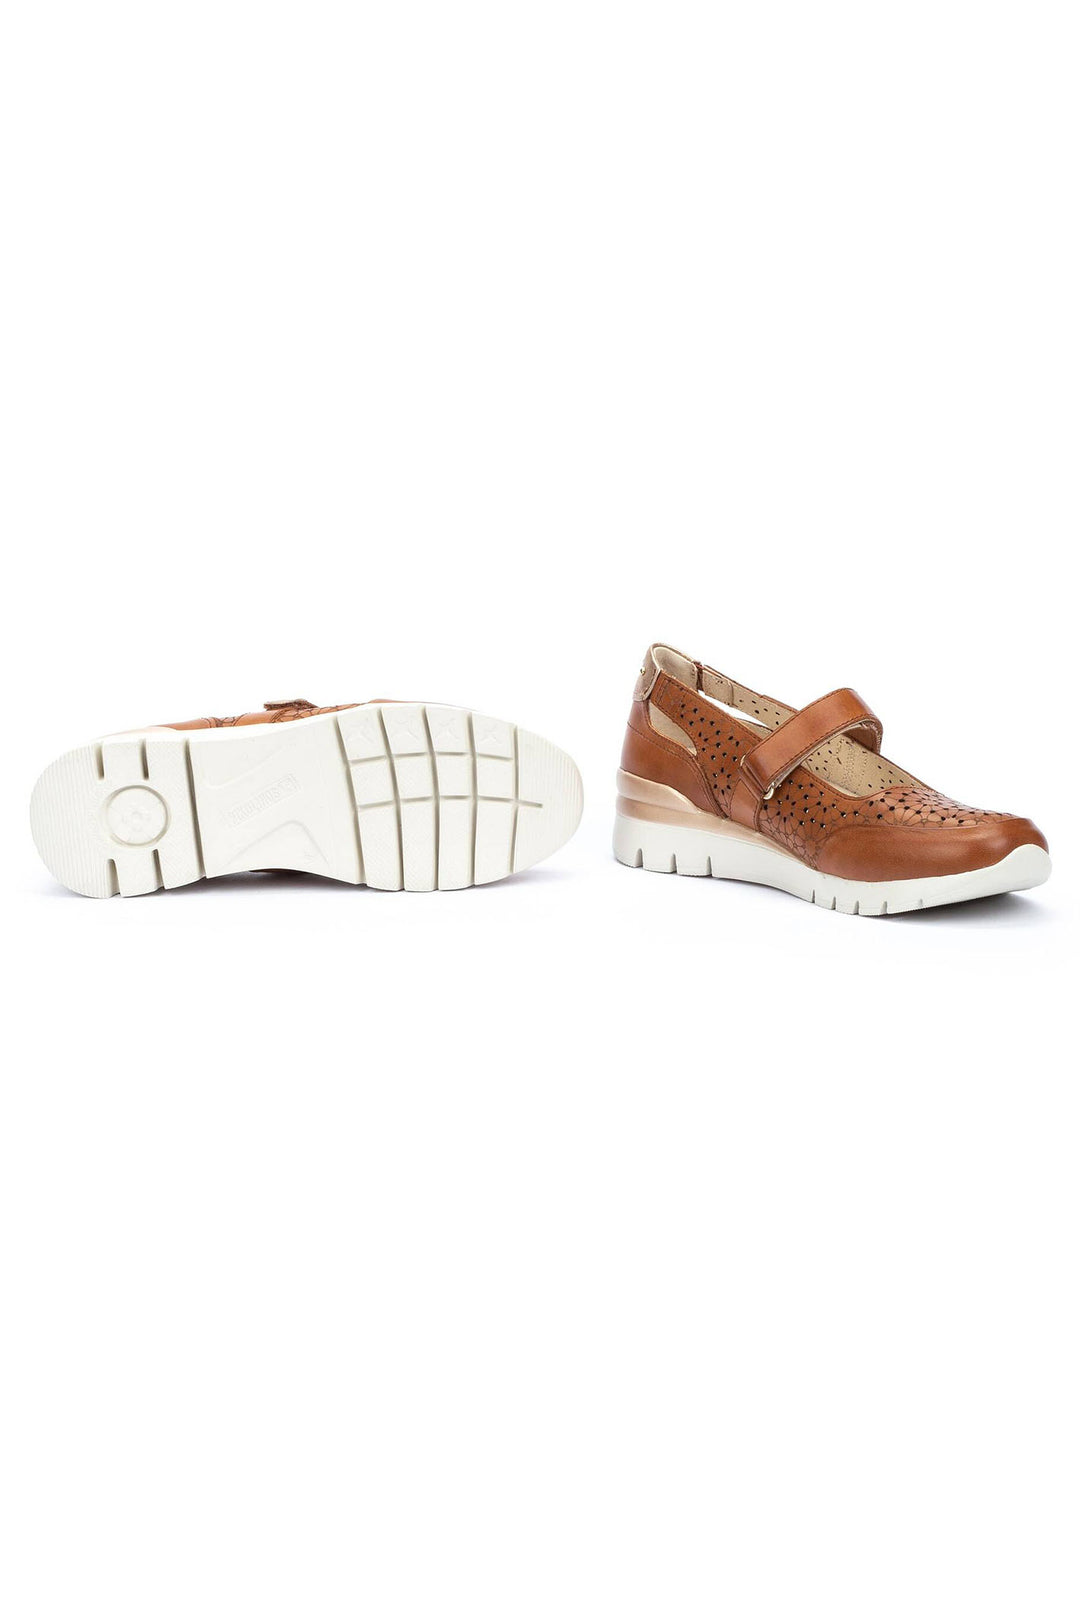 Pikolinos Cantabria W4R-6989C1 Brandy Brown Leather Shoe - Shirley Allum Boutique